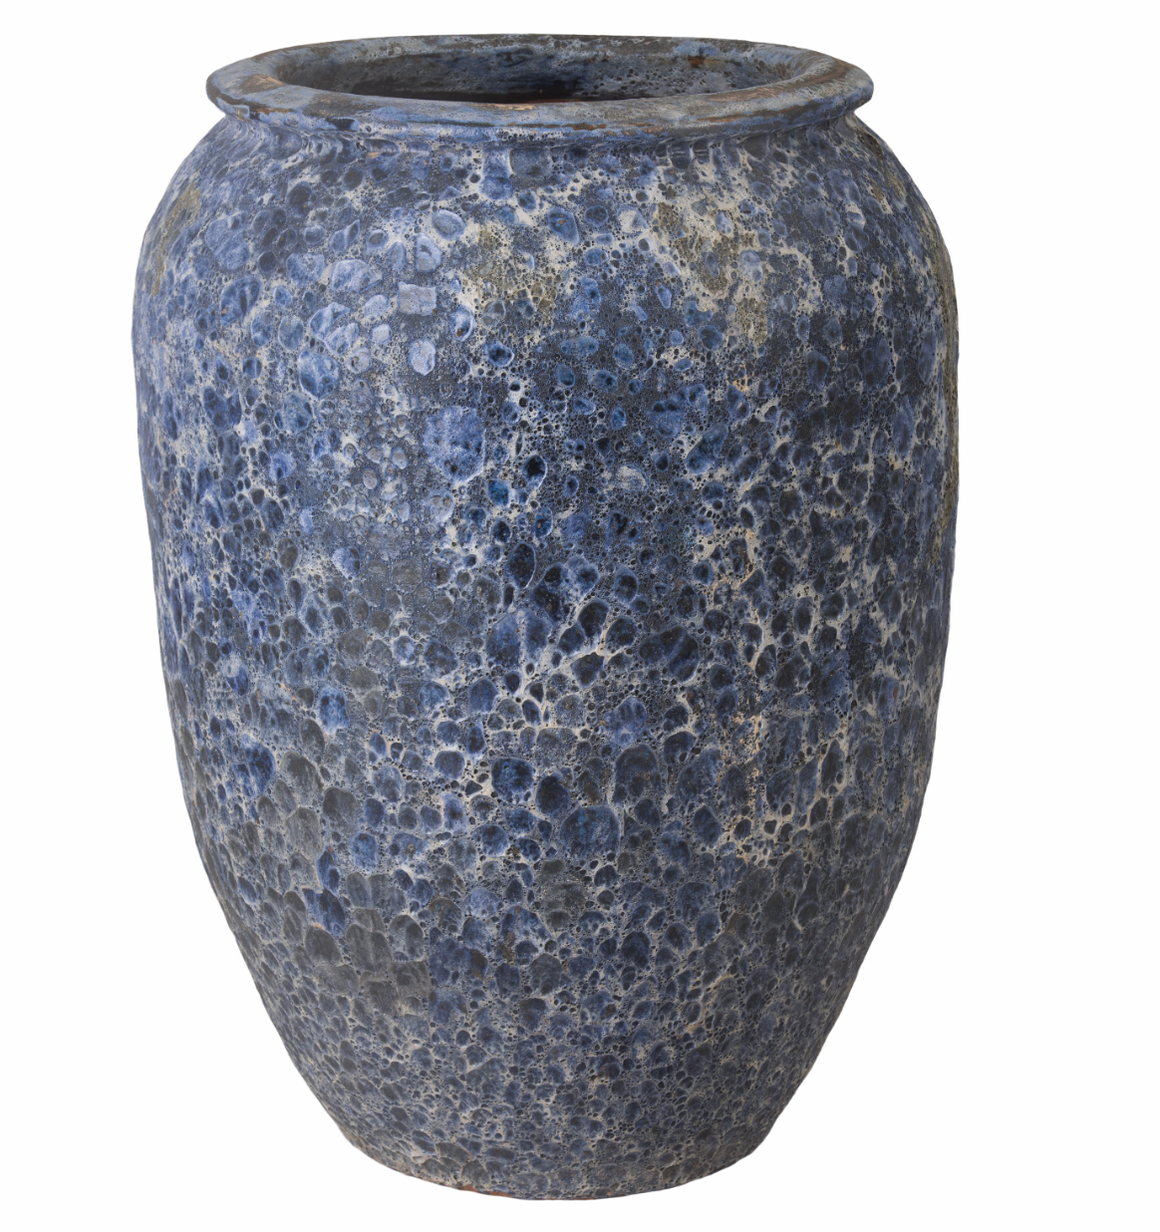 Round Ceramic Jar Planter - Distressed Reef Blue